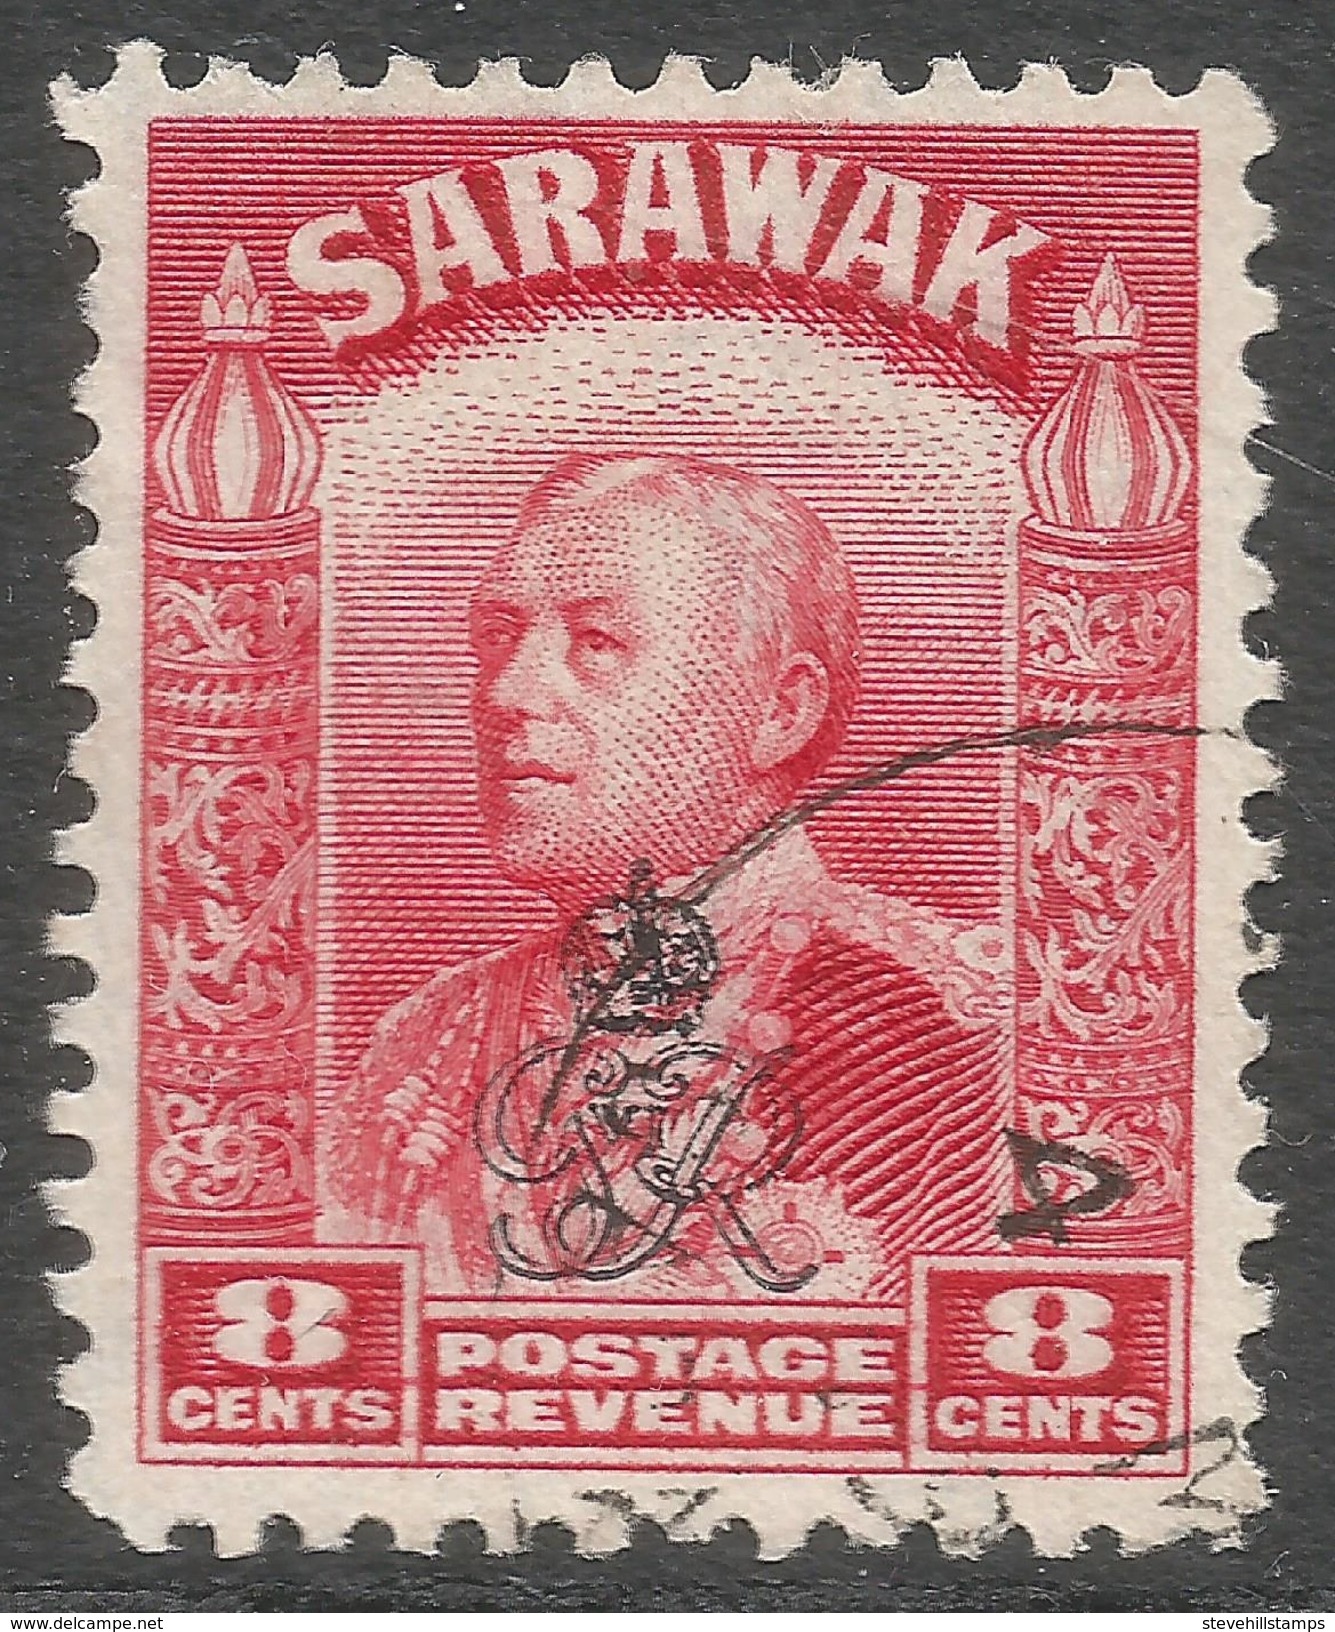 Sarawak. 1947 Crown Colony. GR Cypher Overprint. 8c Used. SG 155 - Sarawak (...-1963)